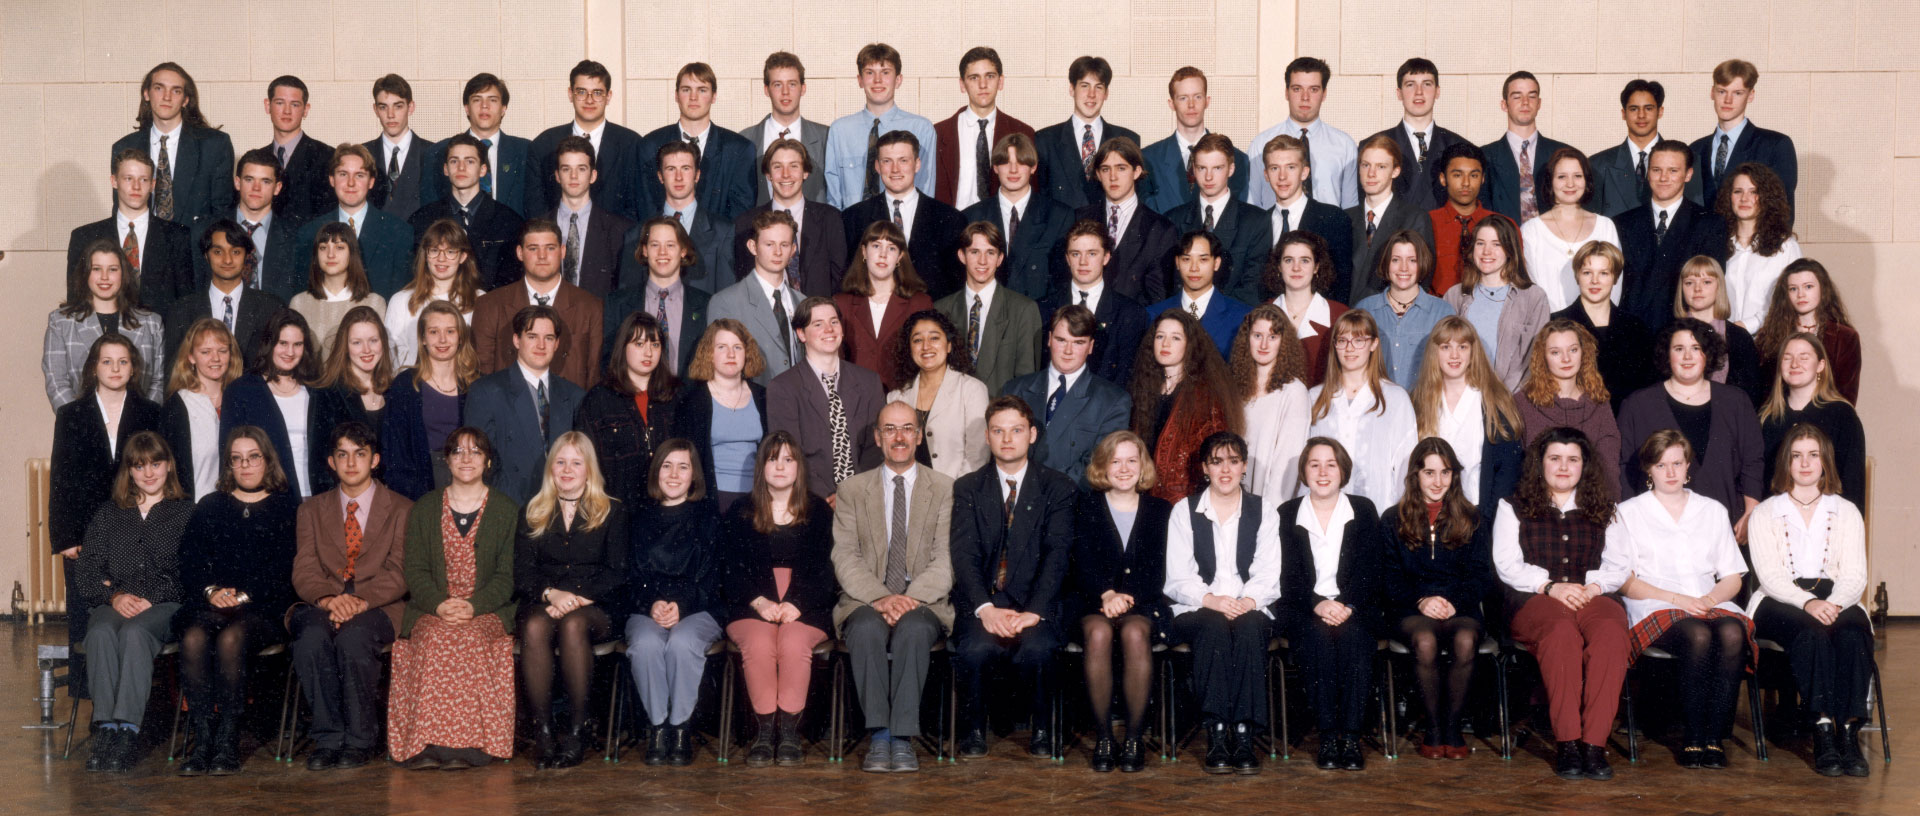 Hundred of Hoo Class of 1994HD